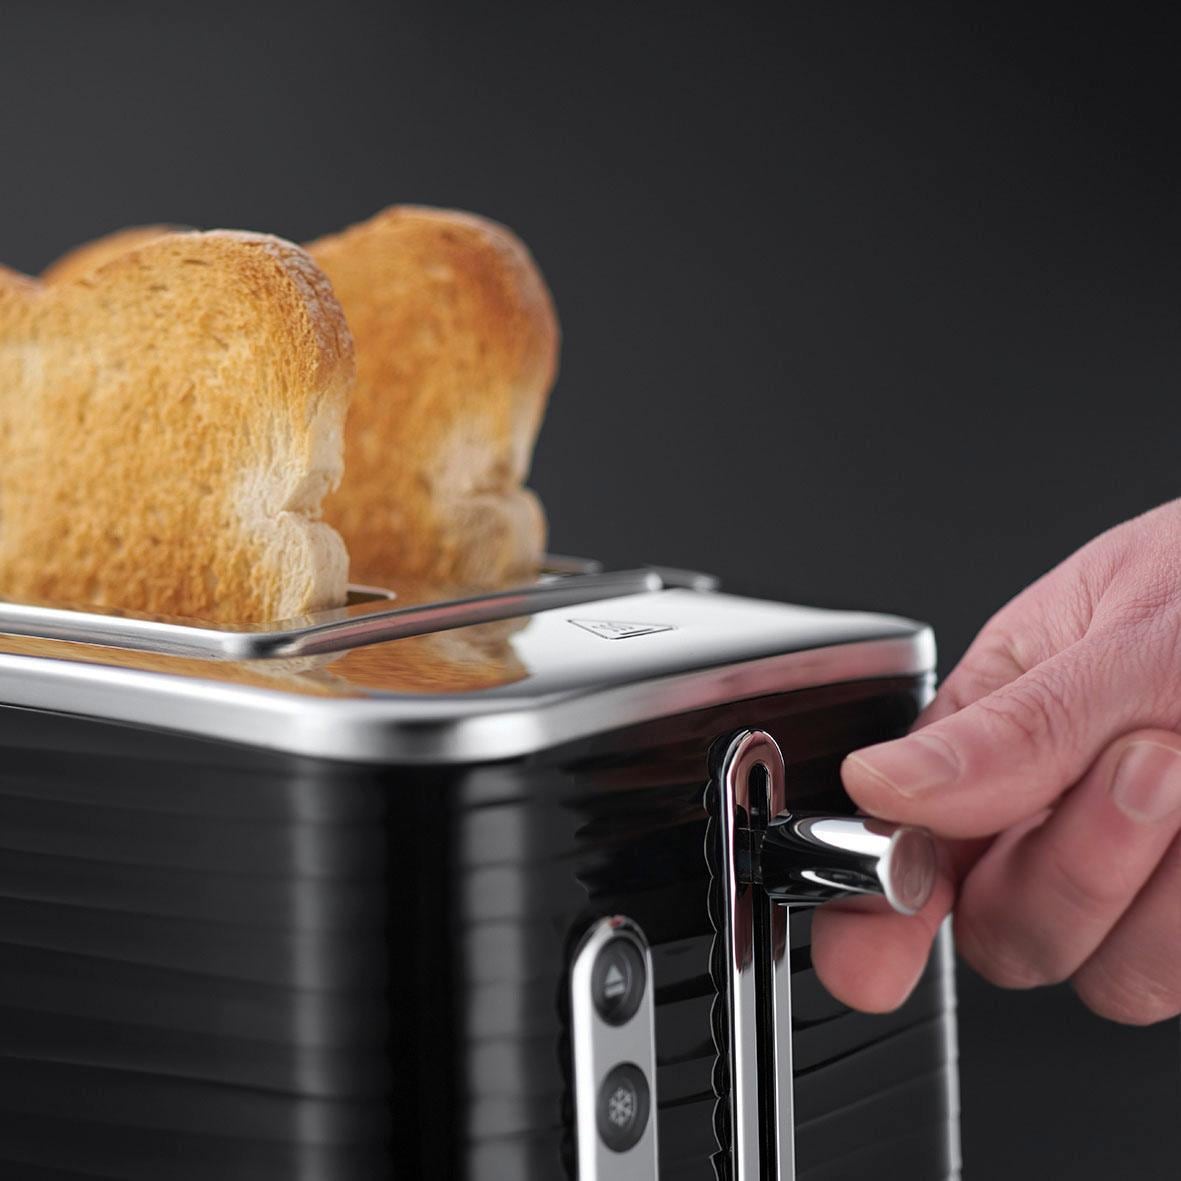 RUSSELL HOBBS Toaster »Inspire 24371-56«, 2 kurze Schlitze, 1050 W